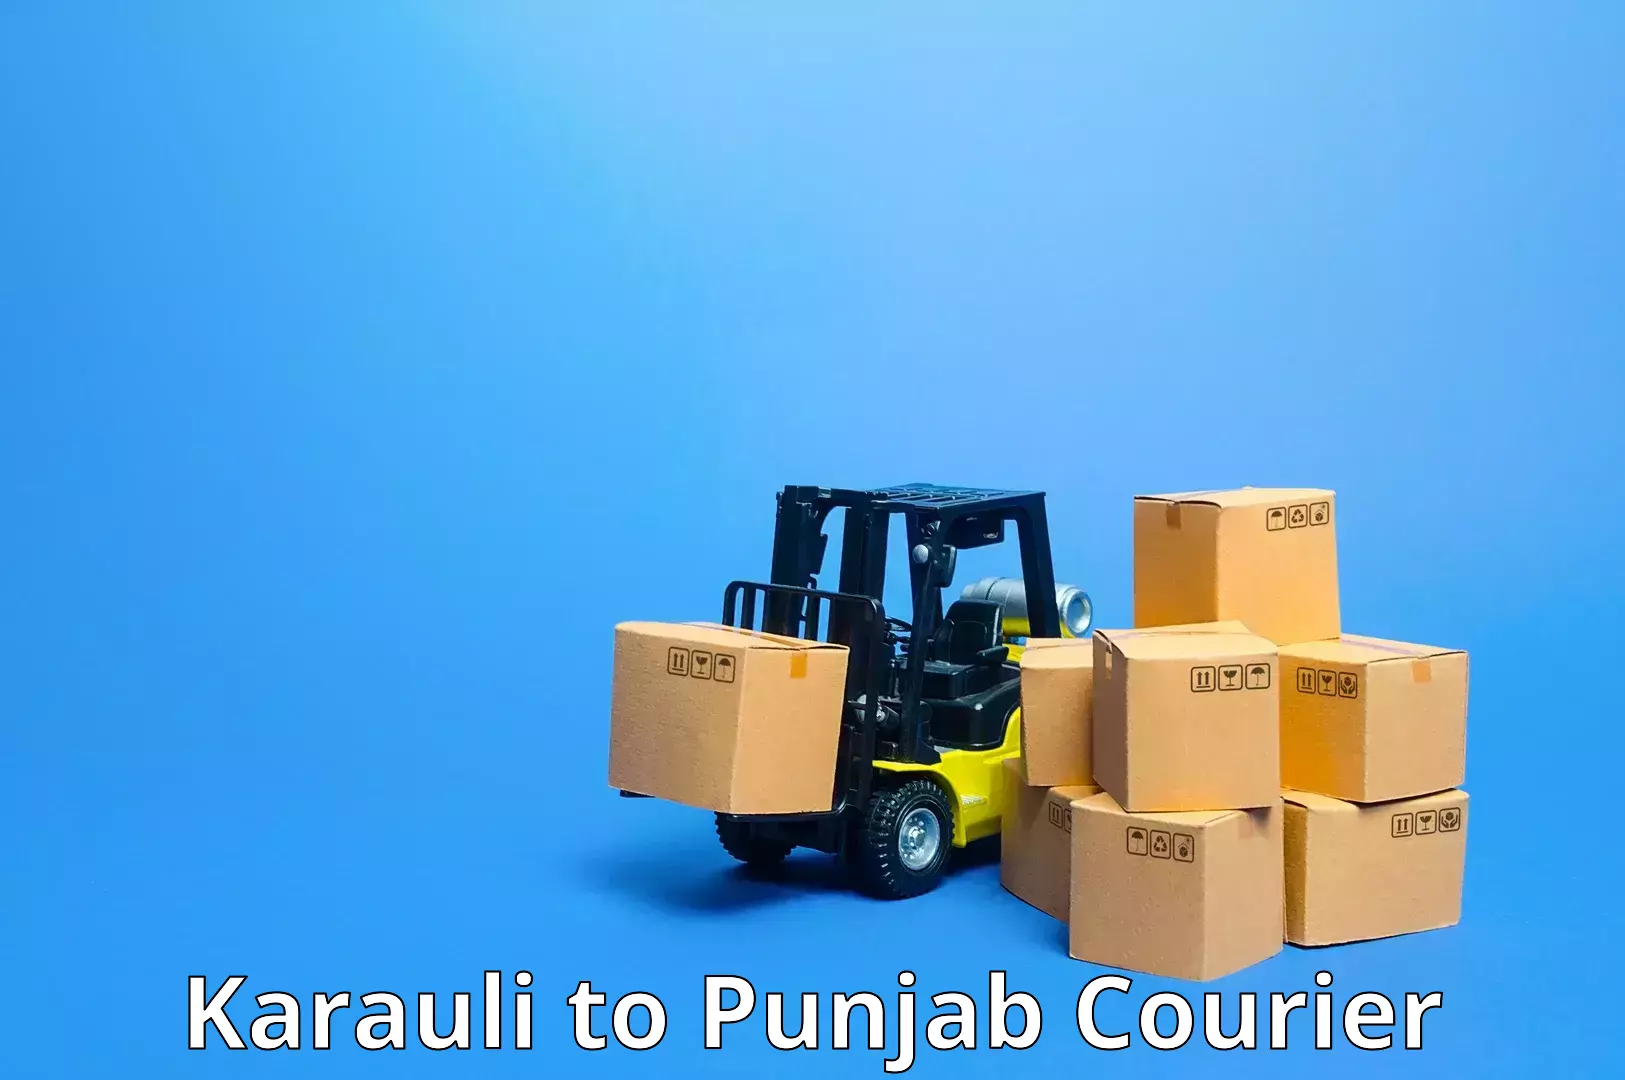 Efficient order fulfillment Karauli to Dhuri